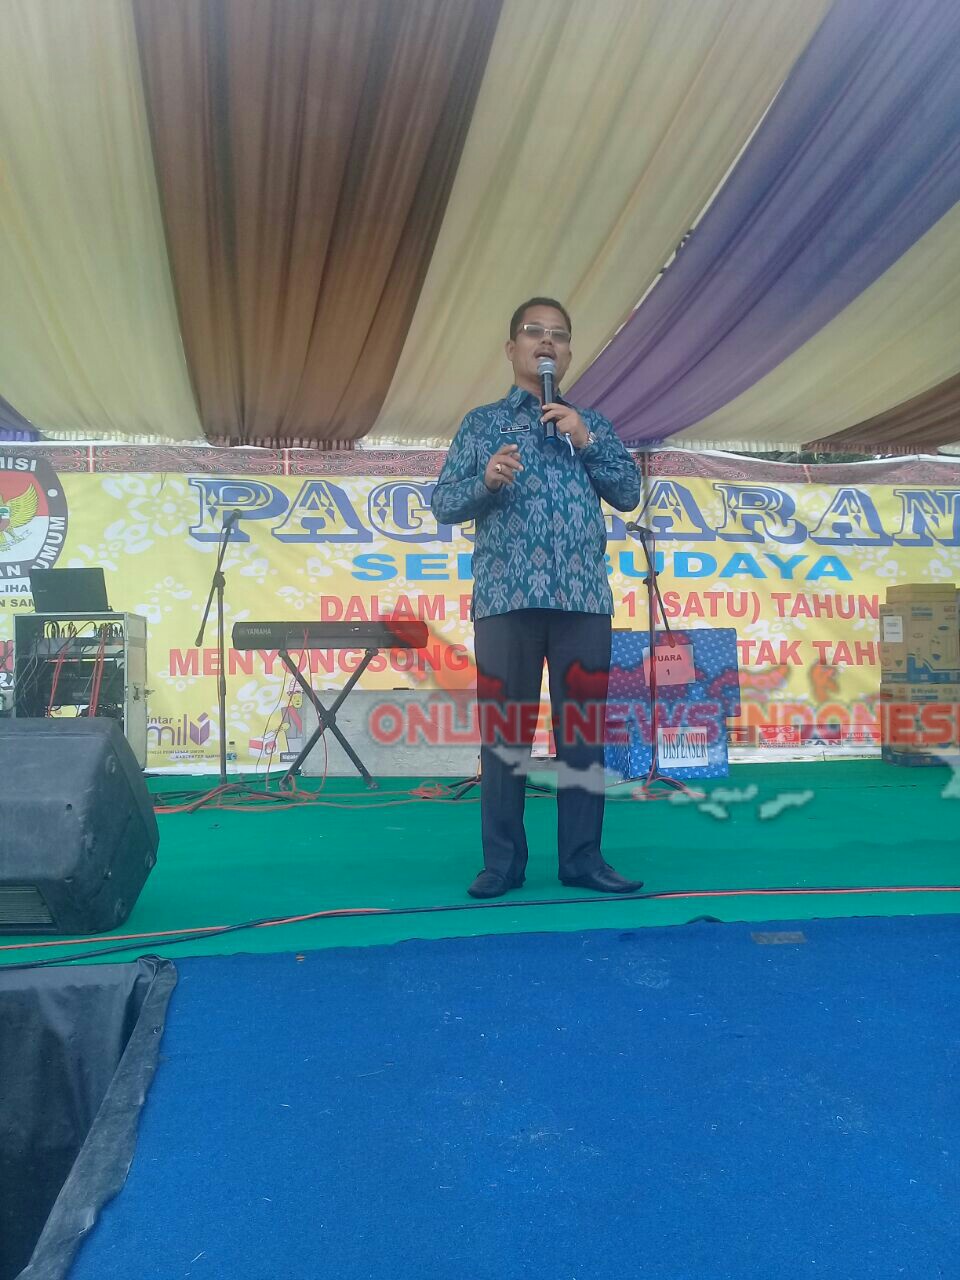 Foto : Sekretaris Daerah Kabupaten Samosir, Drs.Jabiat Sagala M.Hum, menyampaikan sambutannya di pagelaran Seni Budaya oleh KPU Samosir, Sabtu (21/04)